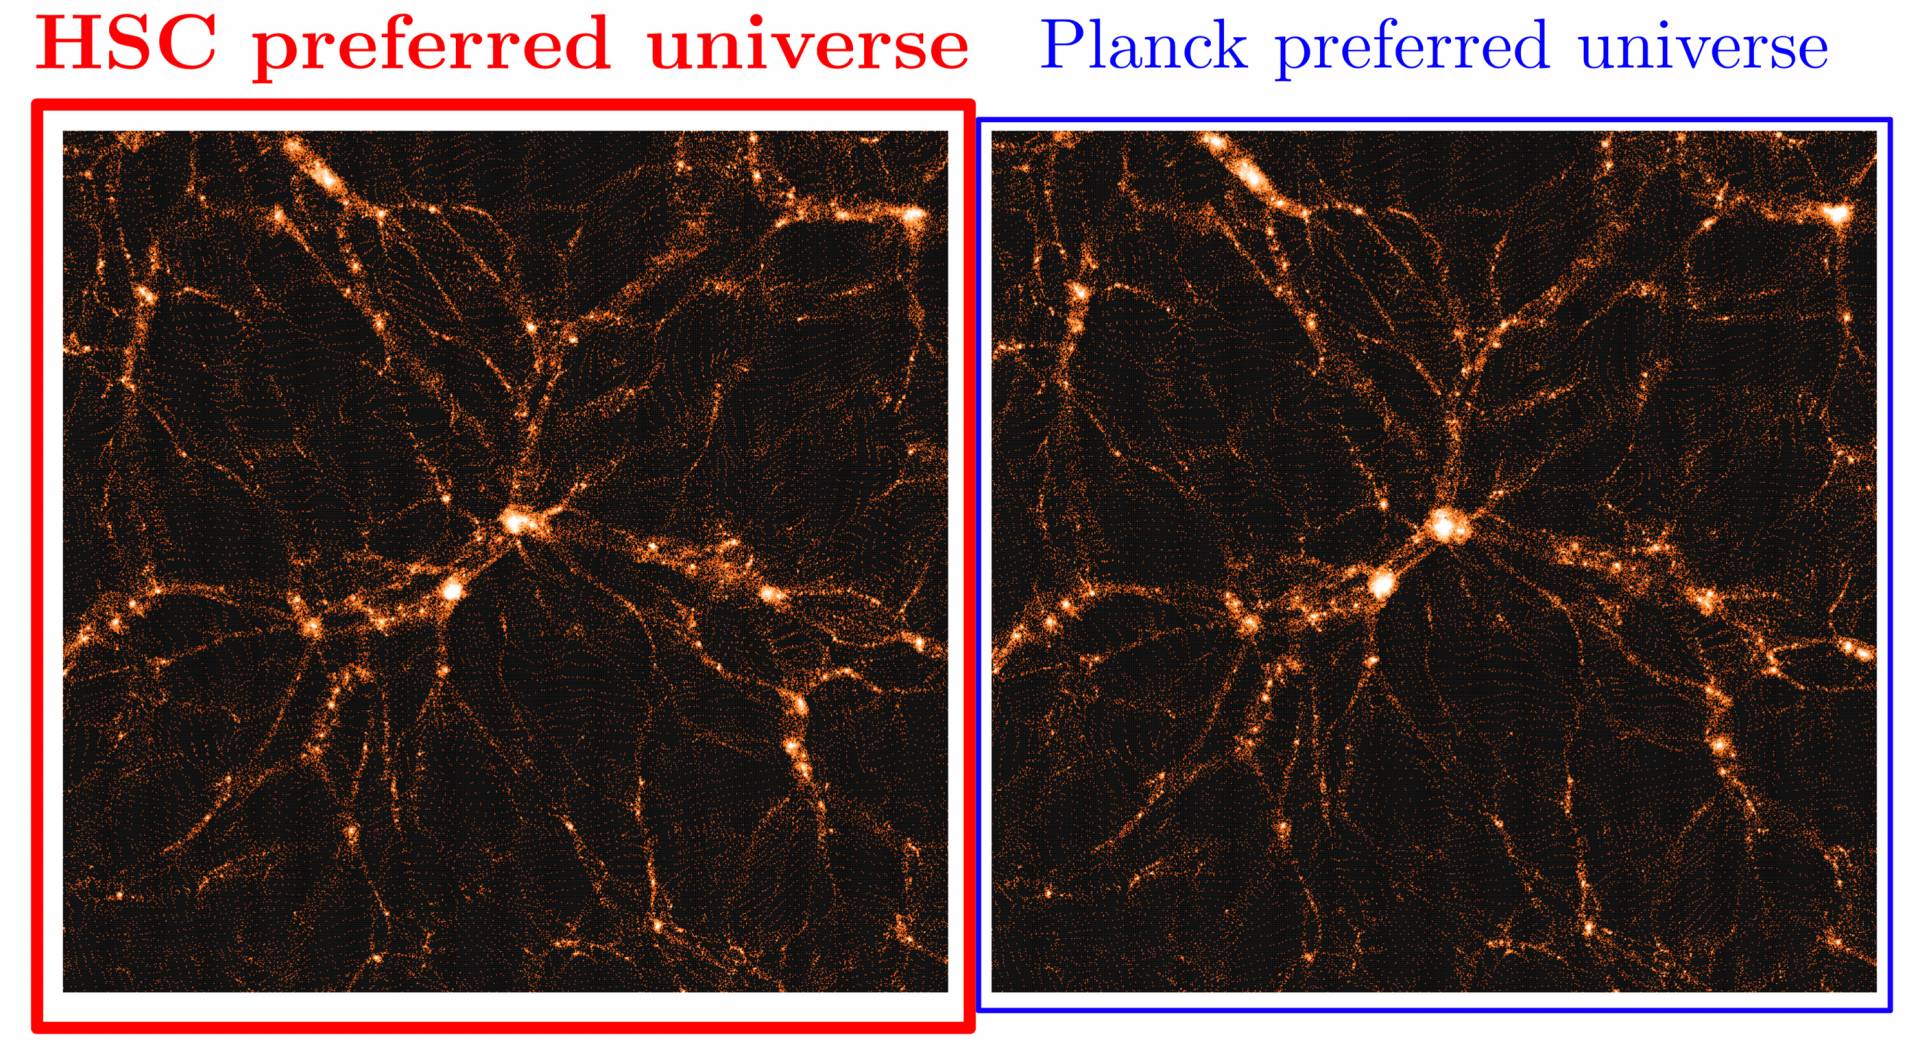 Two images comparing HSC model of dark matter and Planck model of dark matter